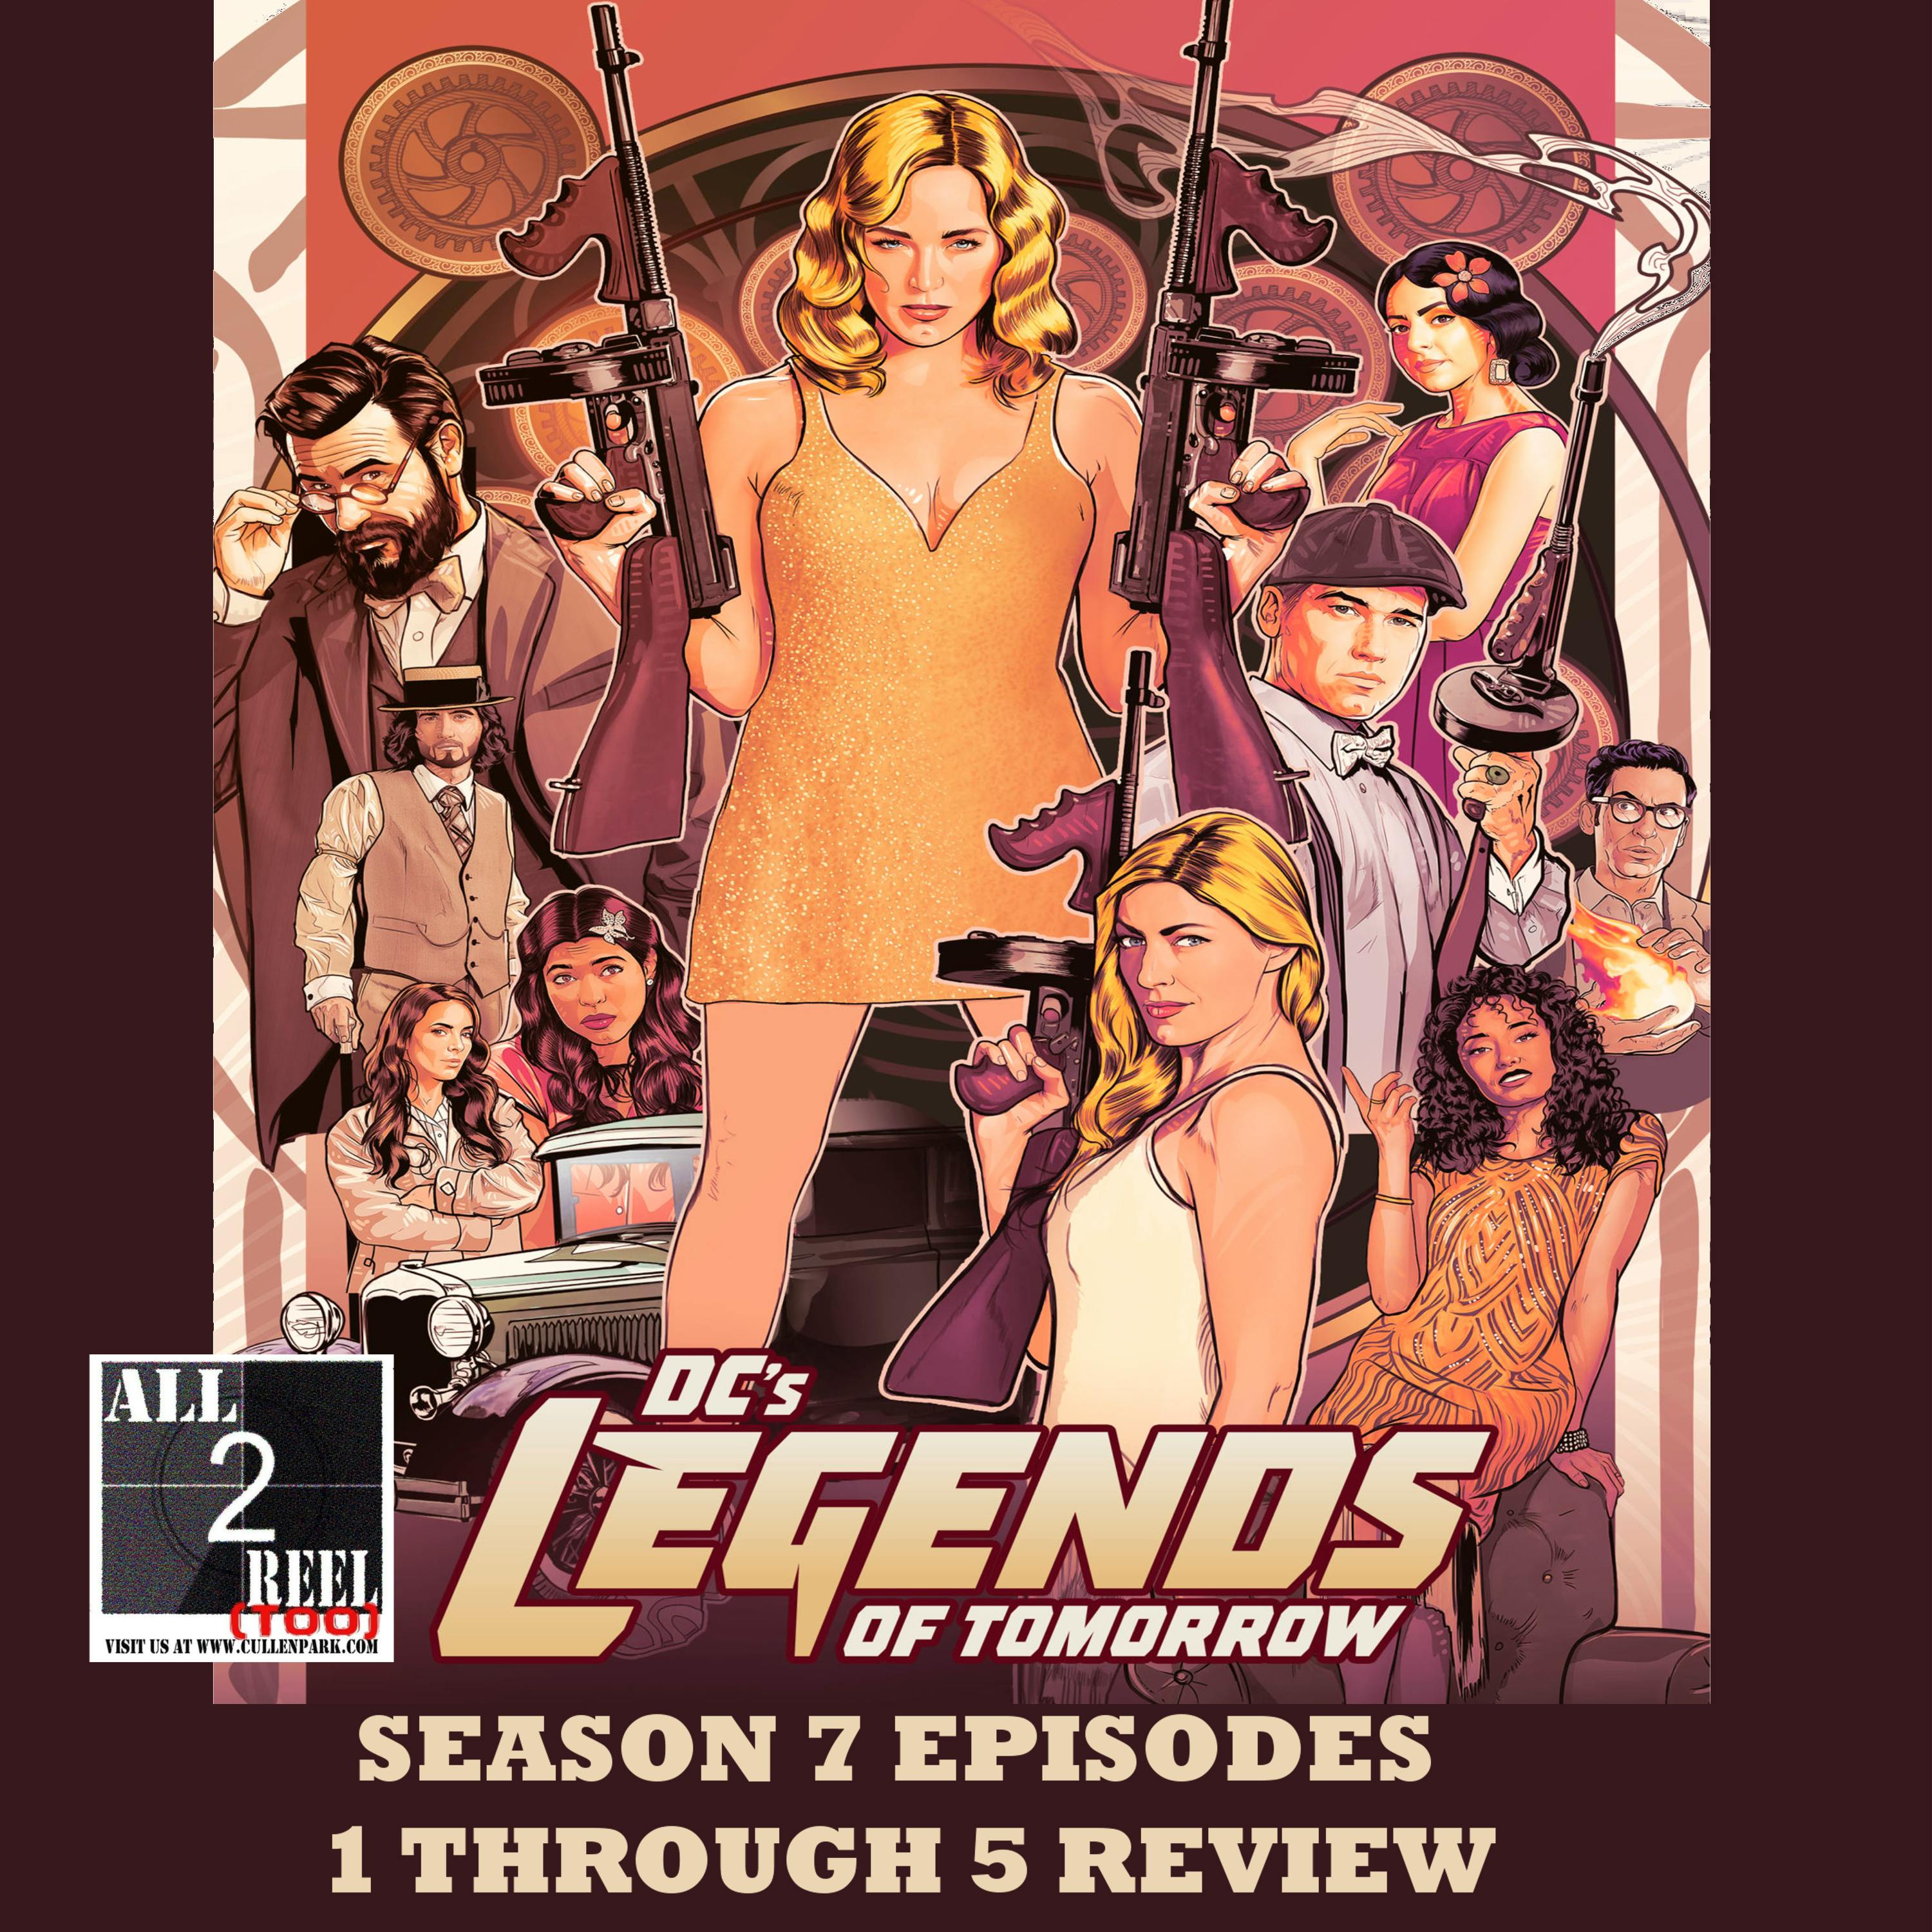 DC's Legends of Tomorrow SEASON 7 EPISODE 1 through 5 REVIEW Image